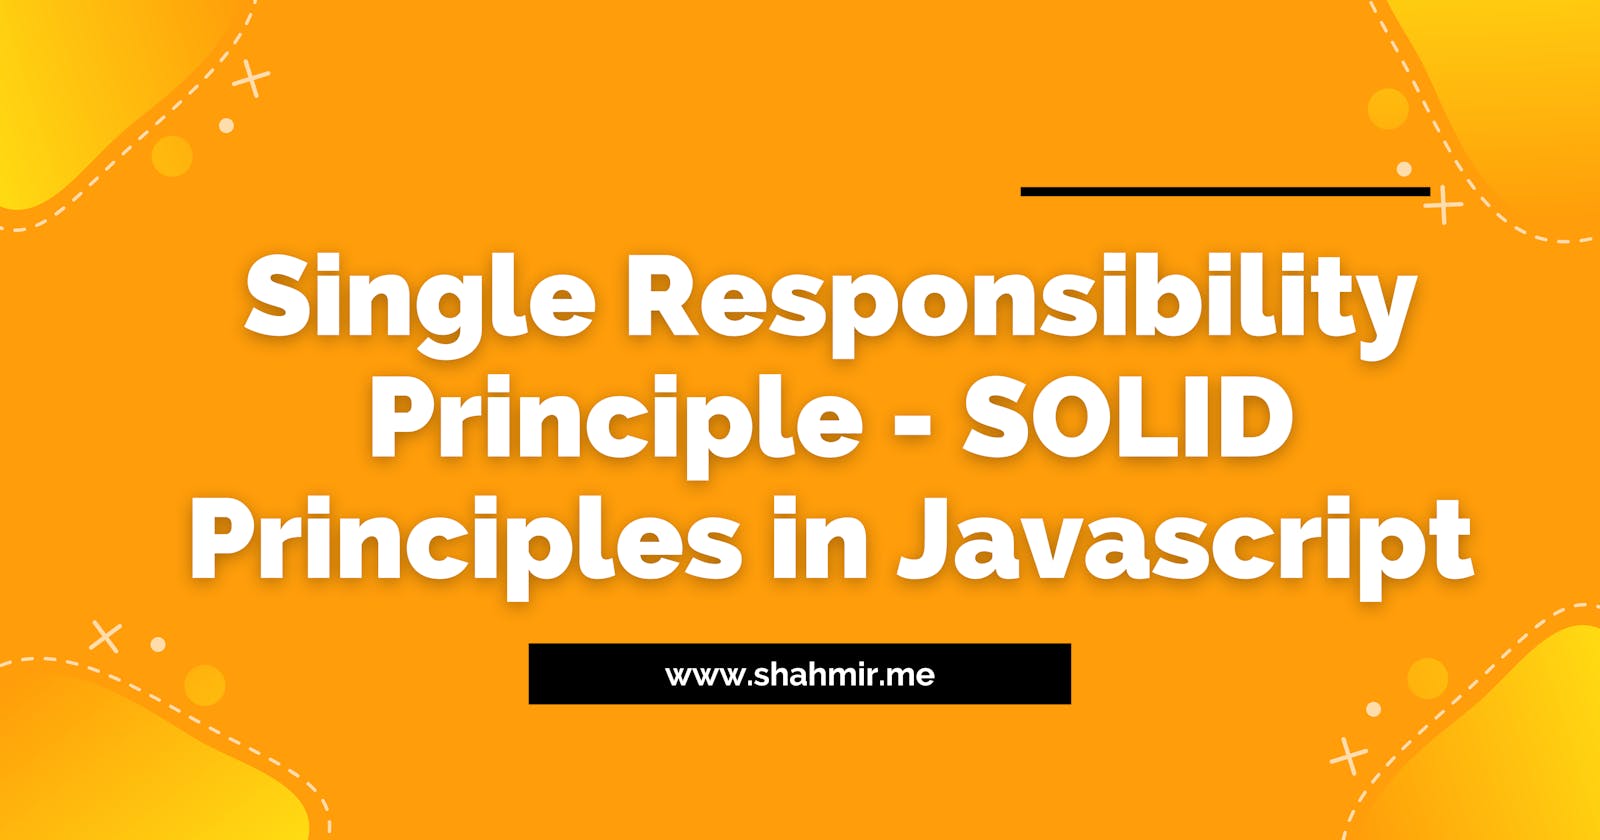 Single Responsibility Principle - SOLID Principles in Javascript